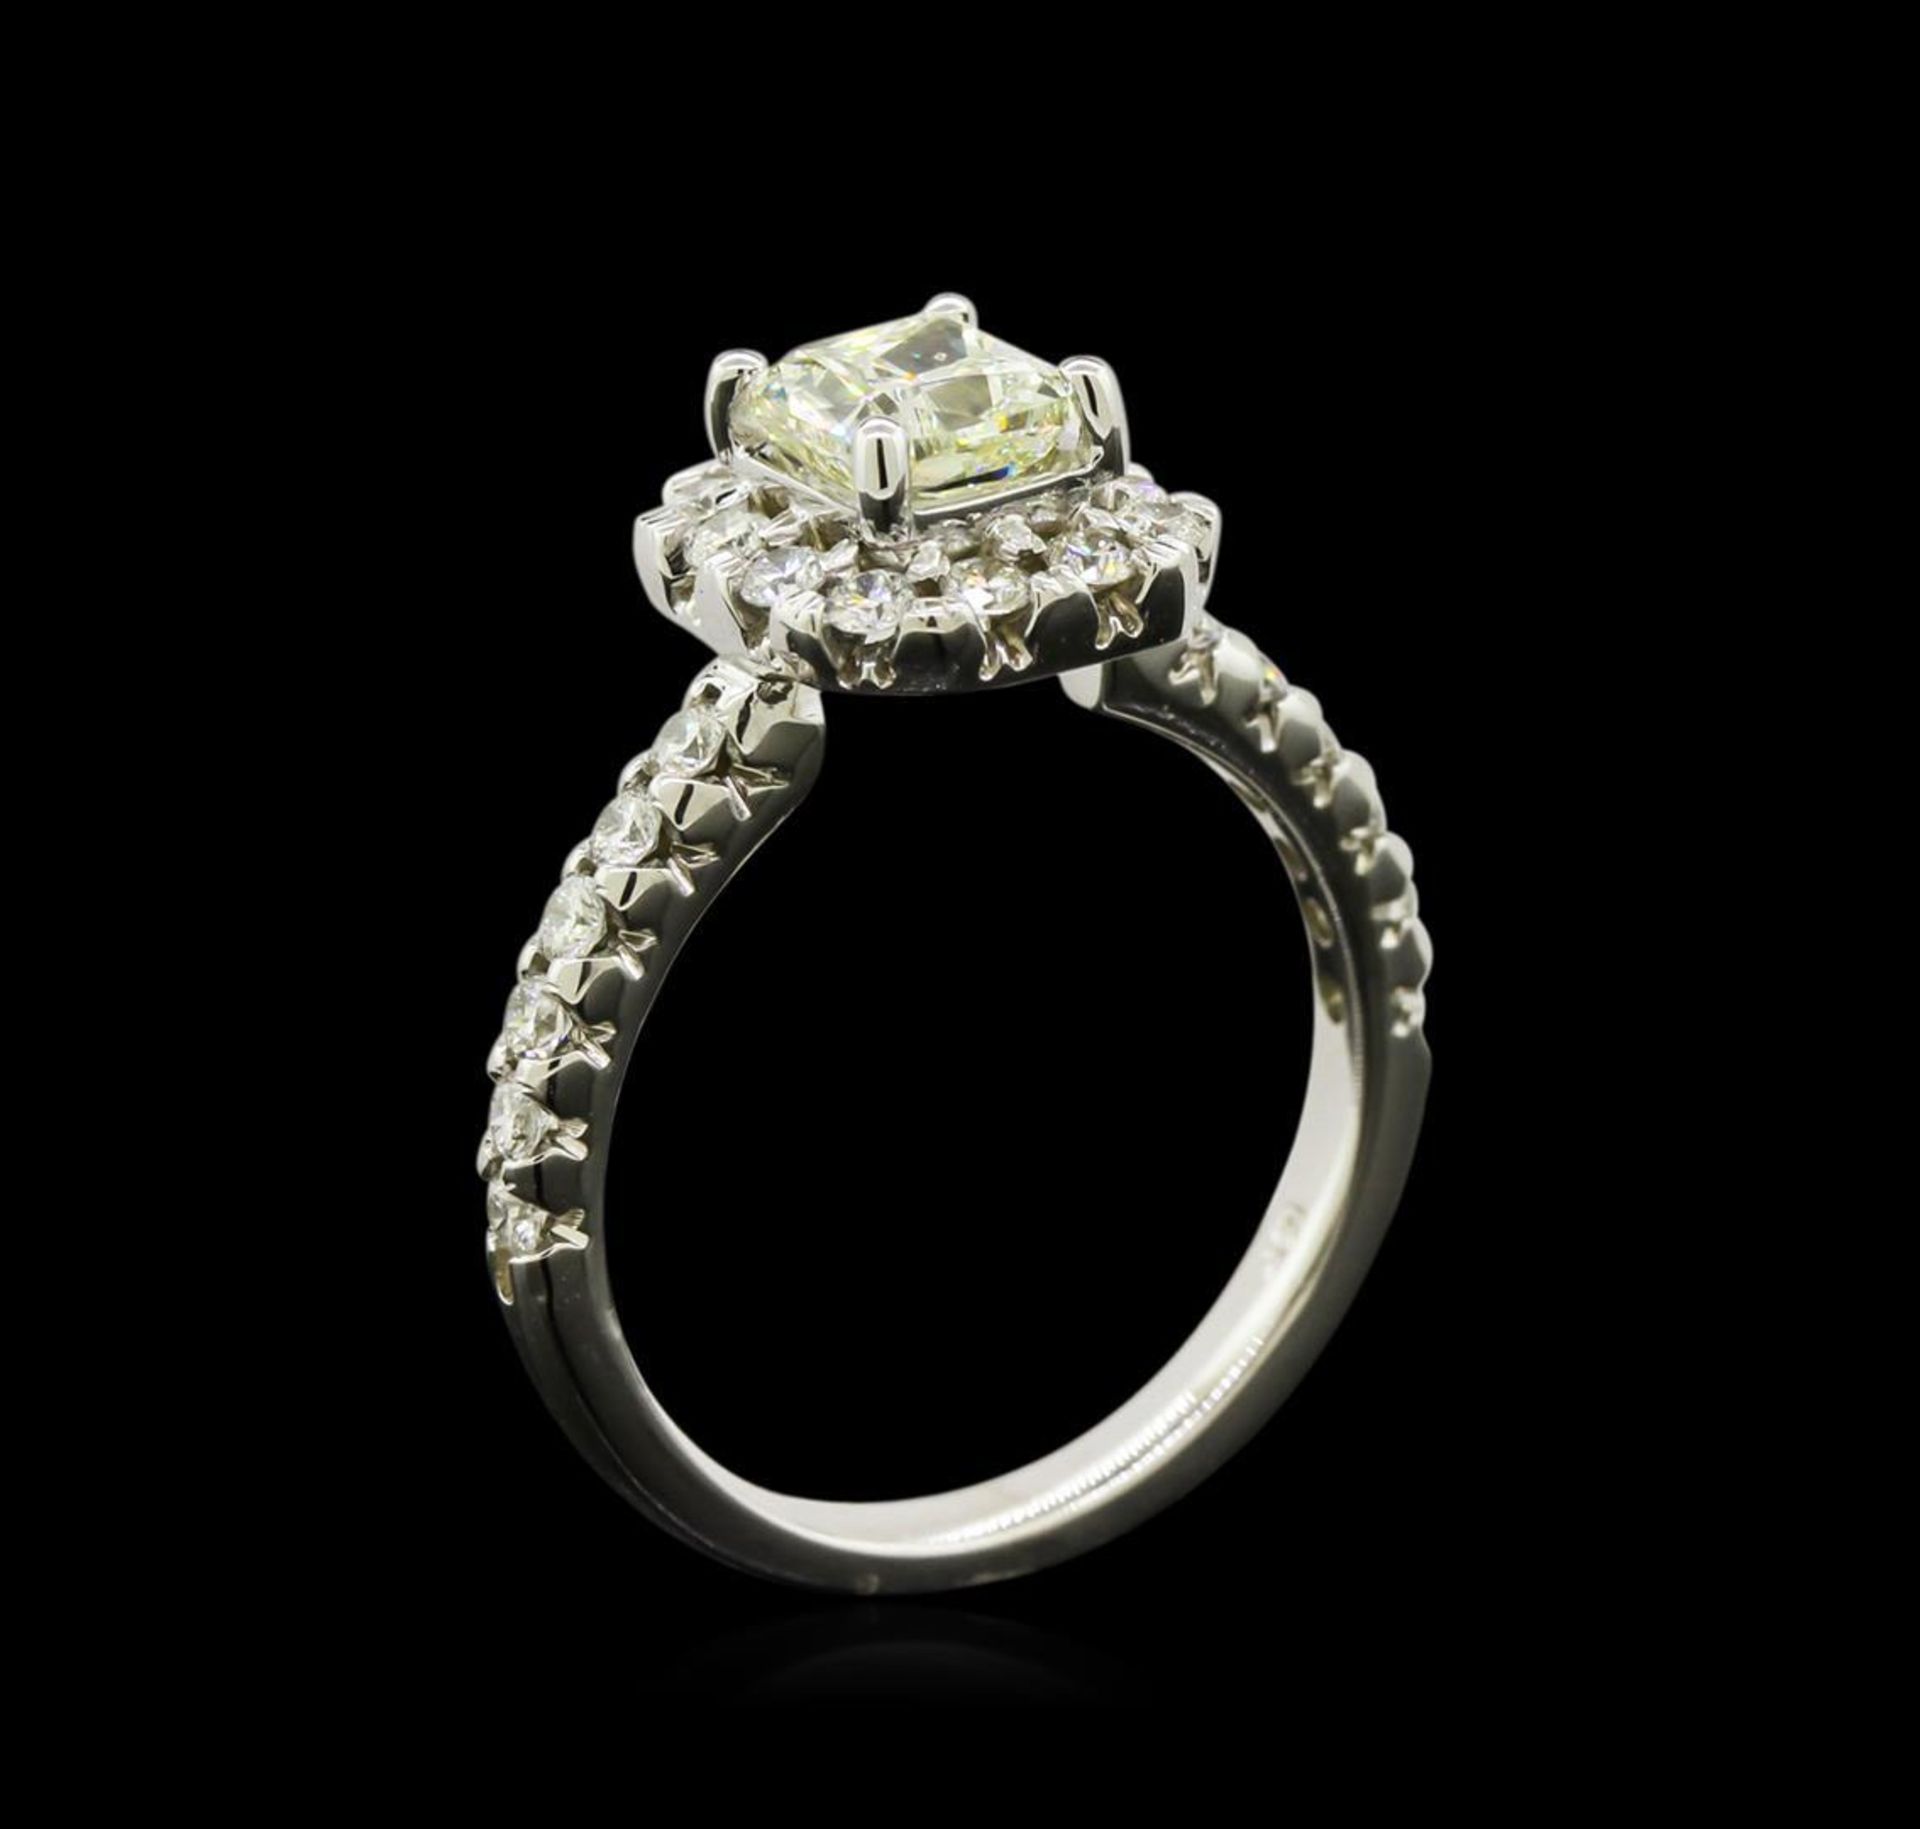 1.64 ctw Diamond Ring - 14KT White Gold - Image 3 of 4